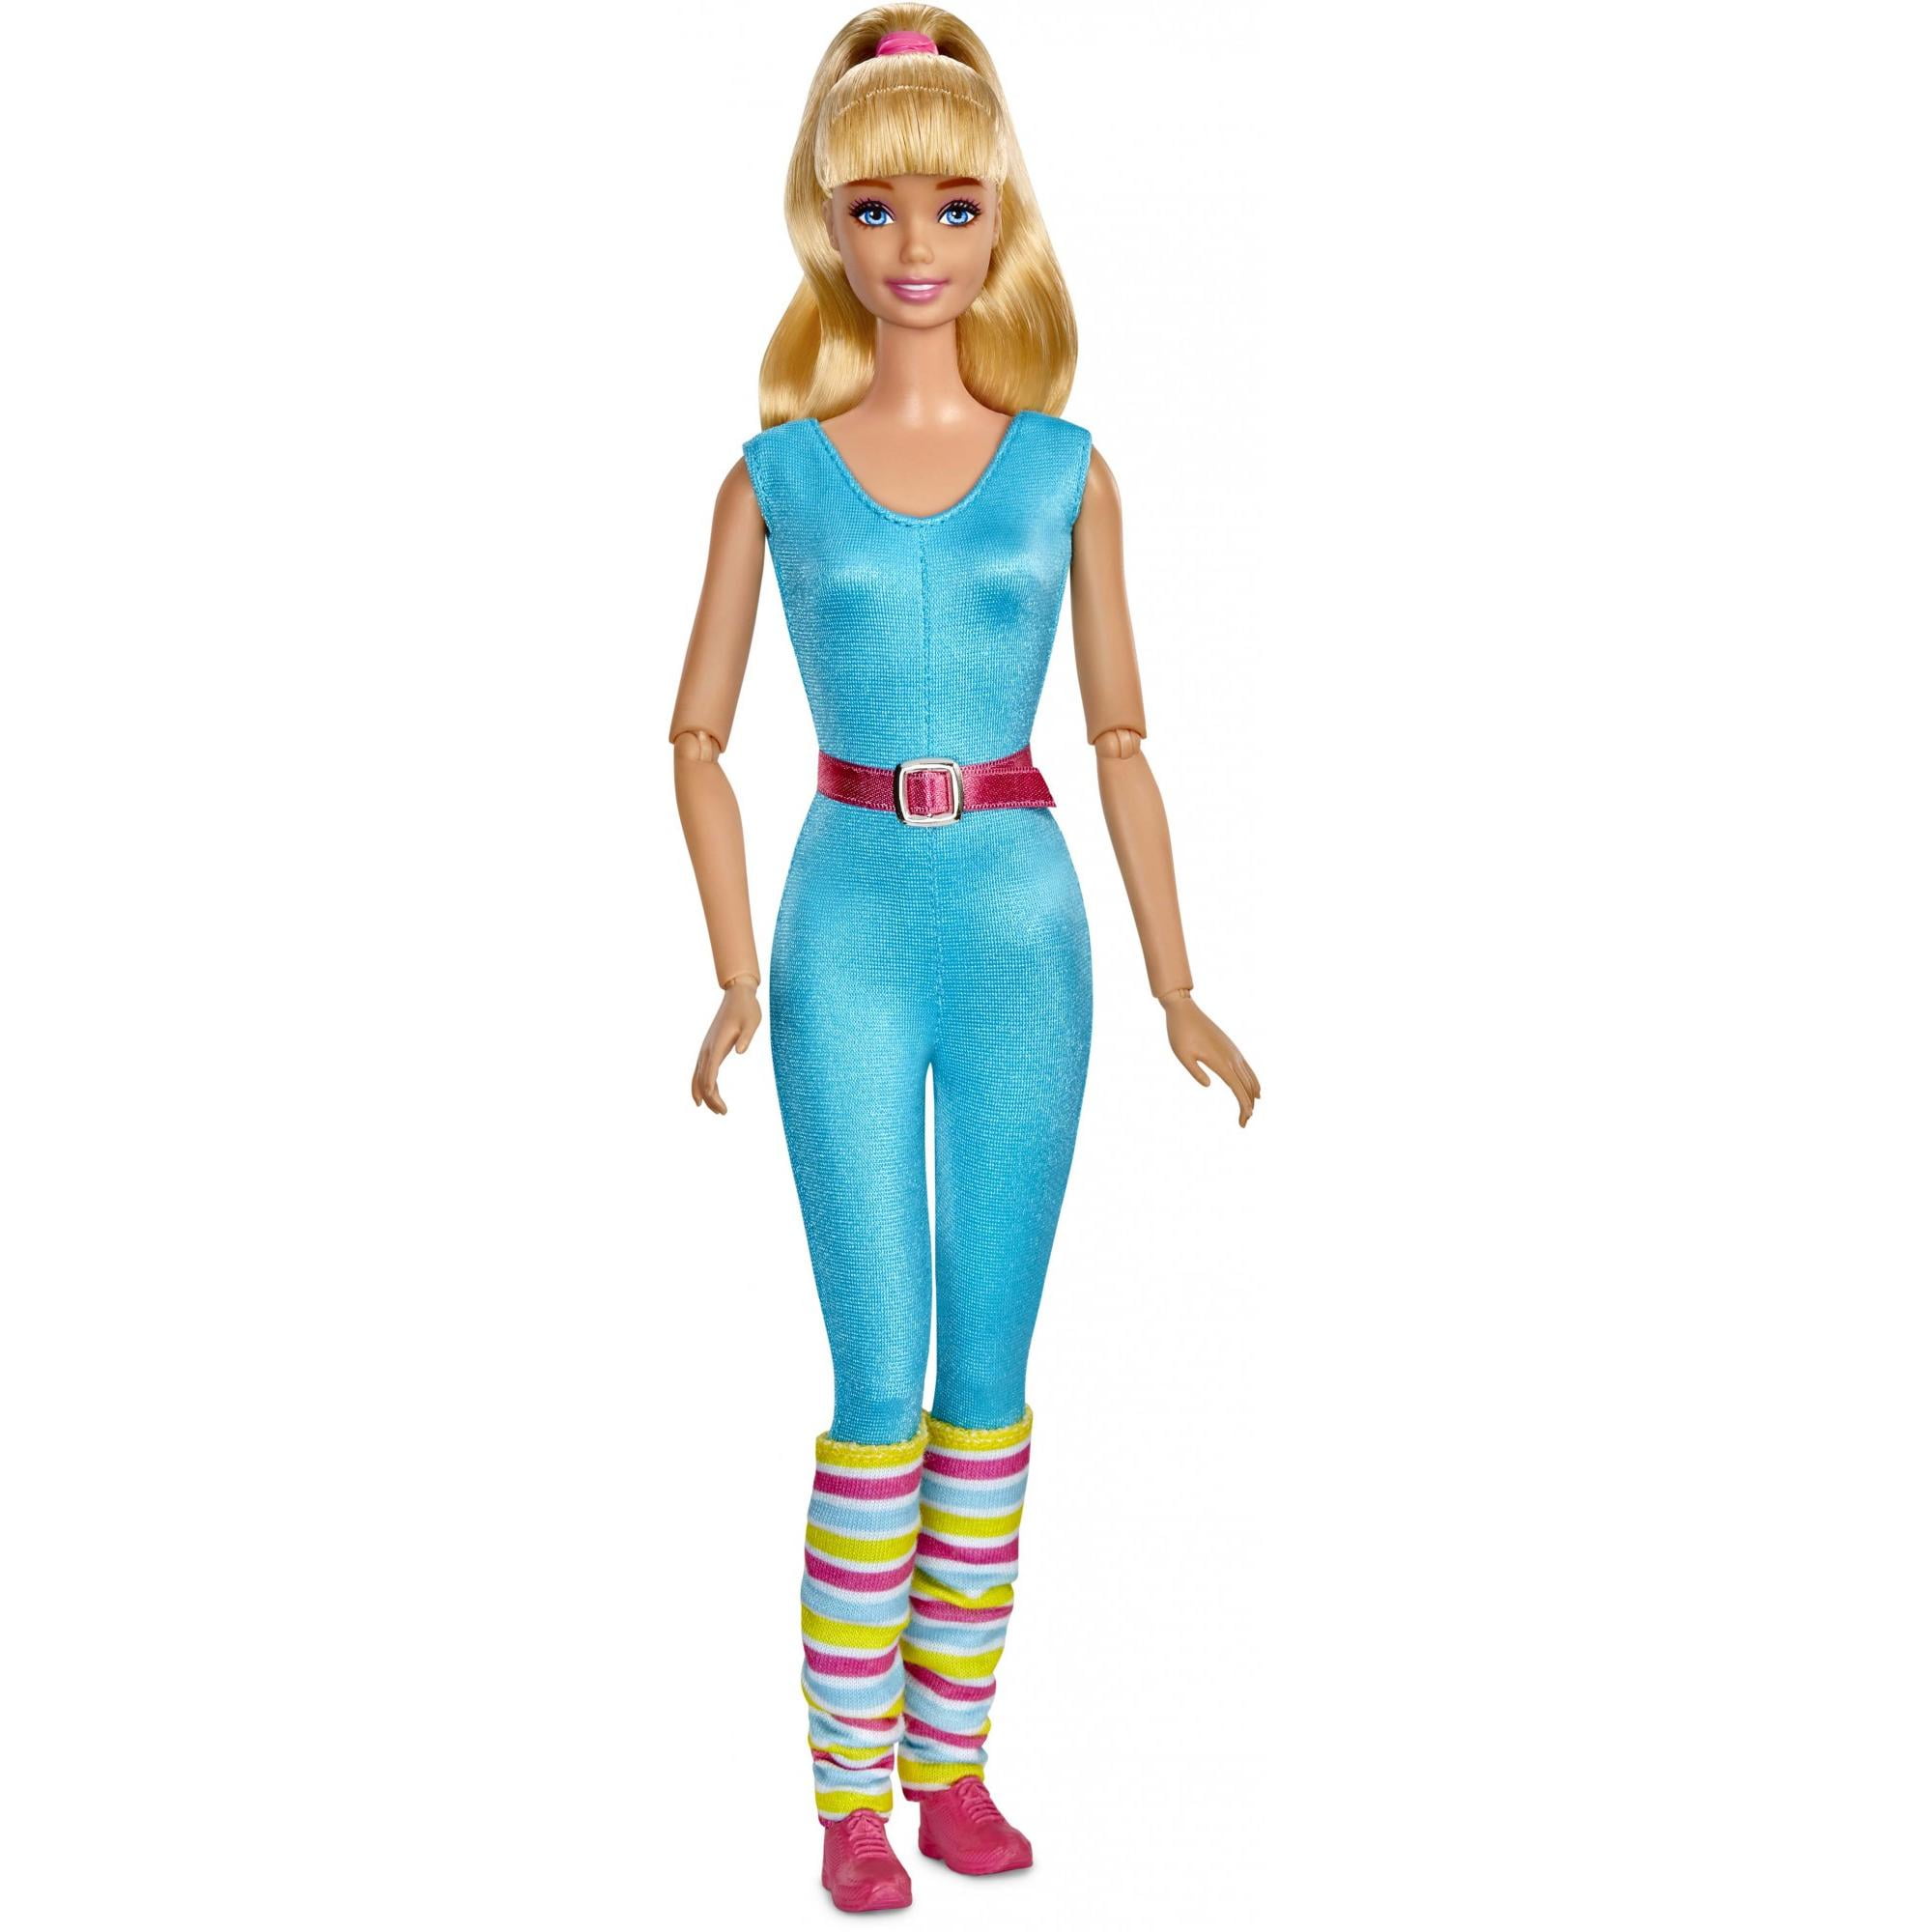 Disney Pixar Toy Story 4 Barbie Doll With Movie Inspired Details Walmart Com